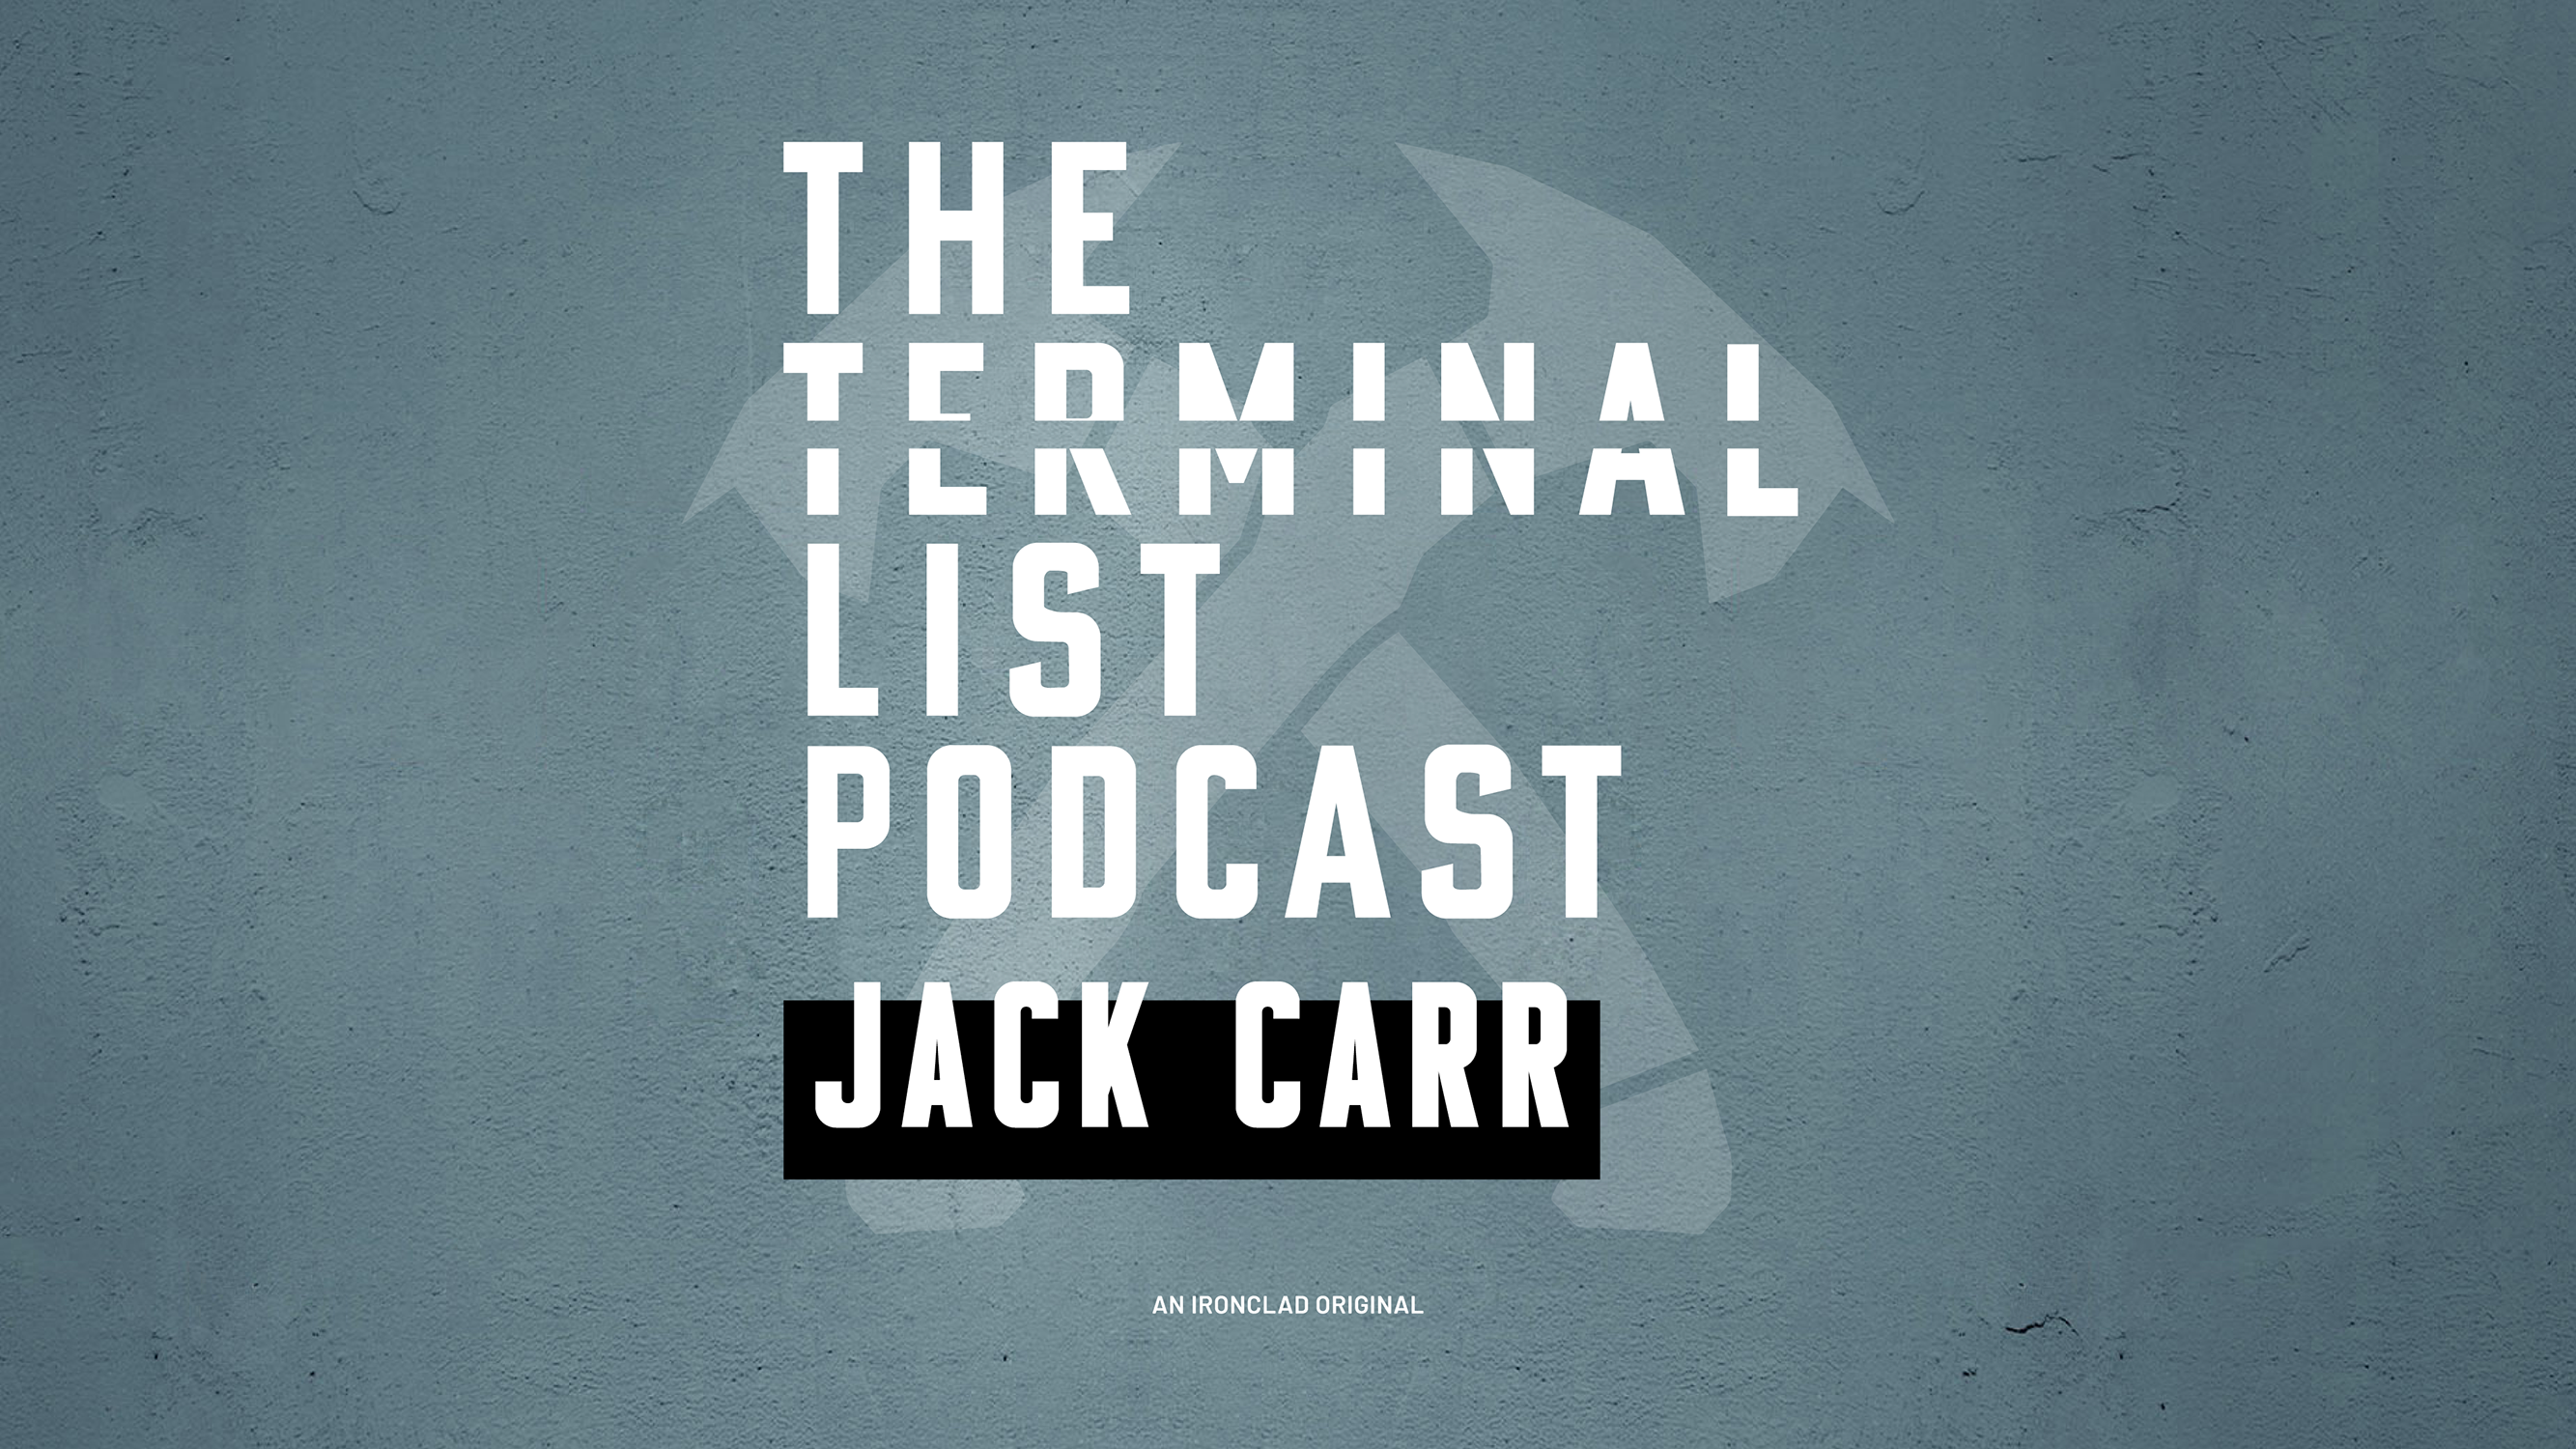 THE TERMINAL LIST PODCAST w JACK CARR